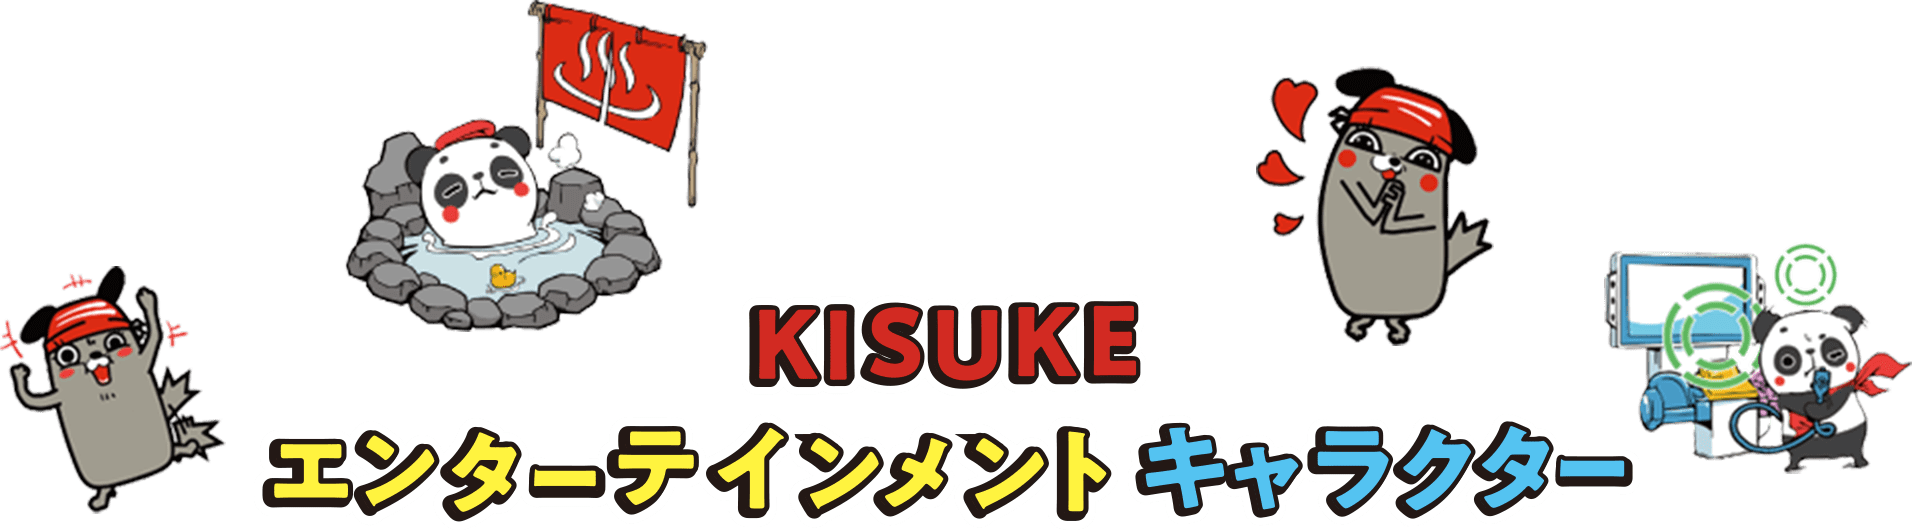 KISUKE エンターテインメントキャラクター